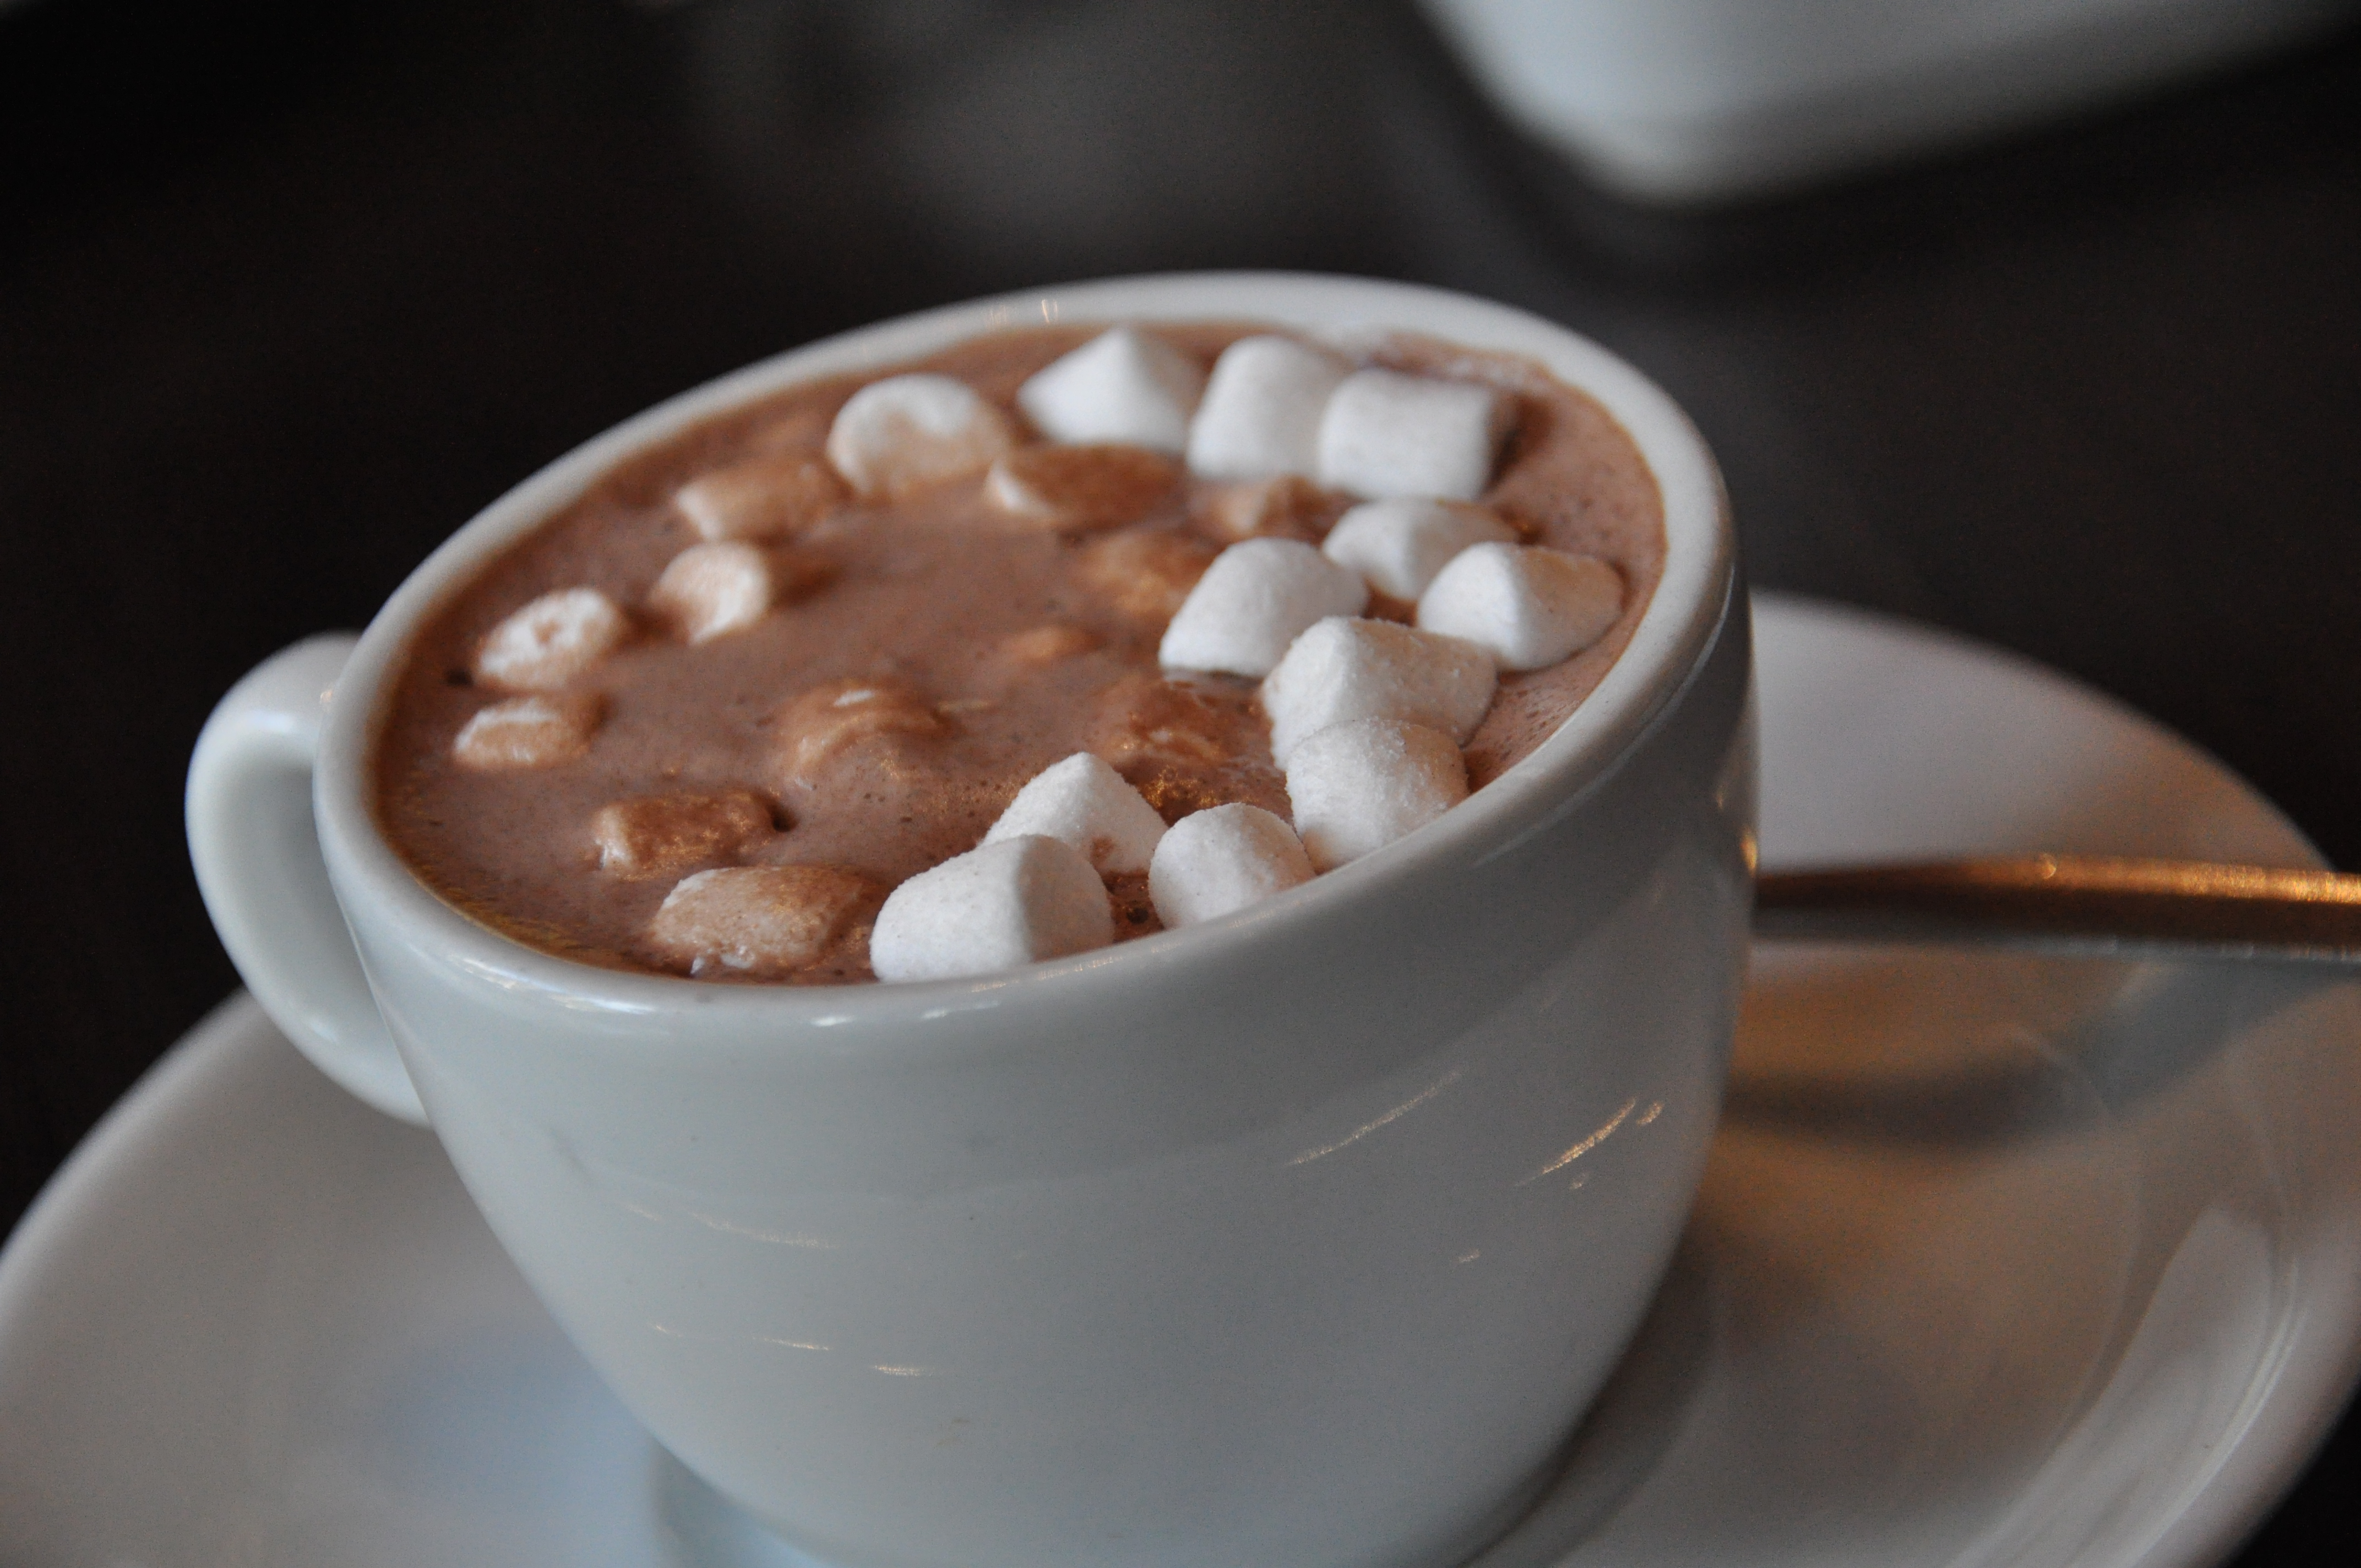 marshmallow_hot_chocolate_by_g_riluv-d3jx8gm.jpg